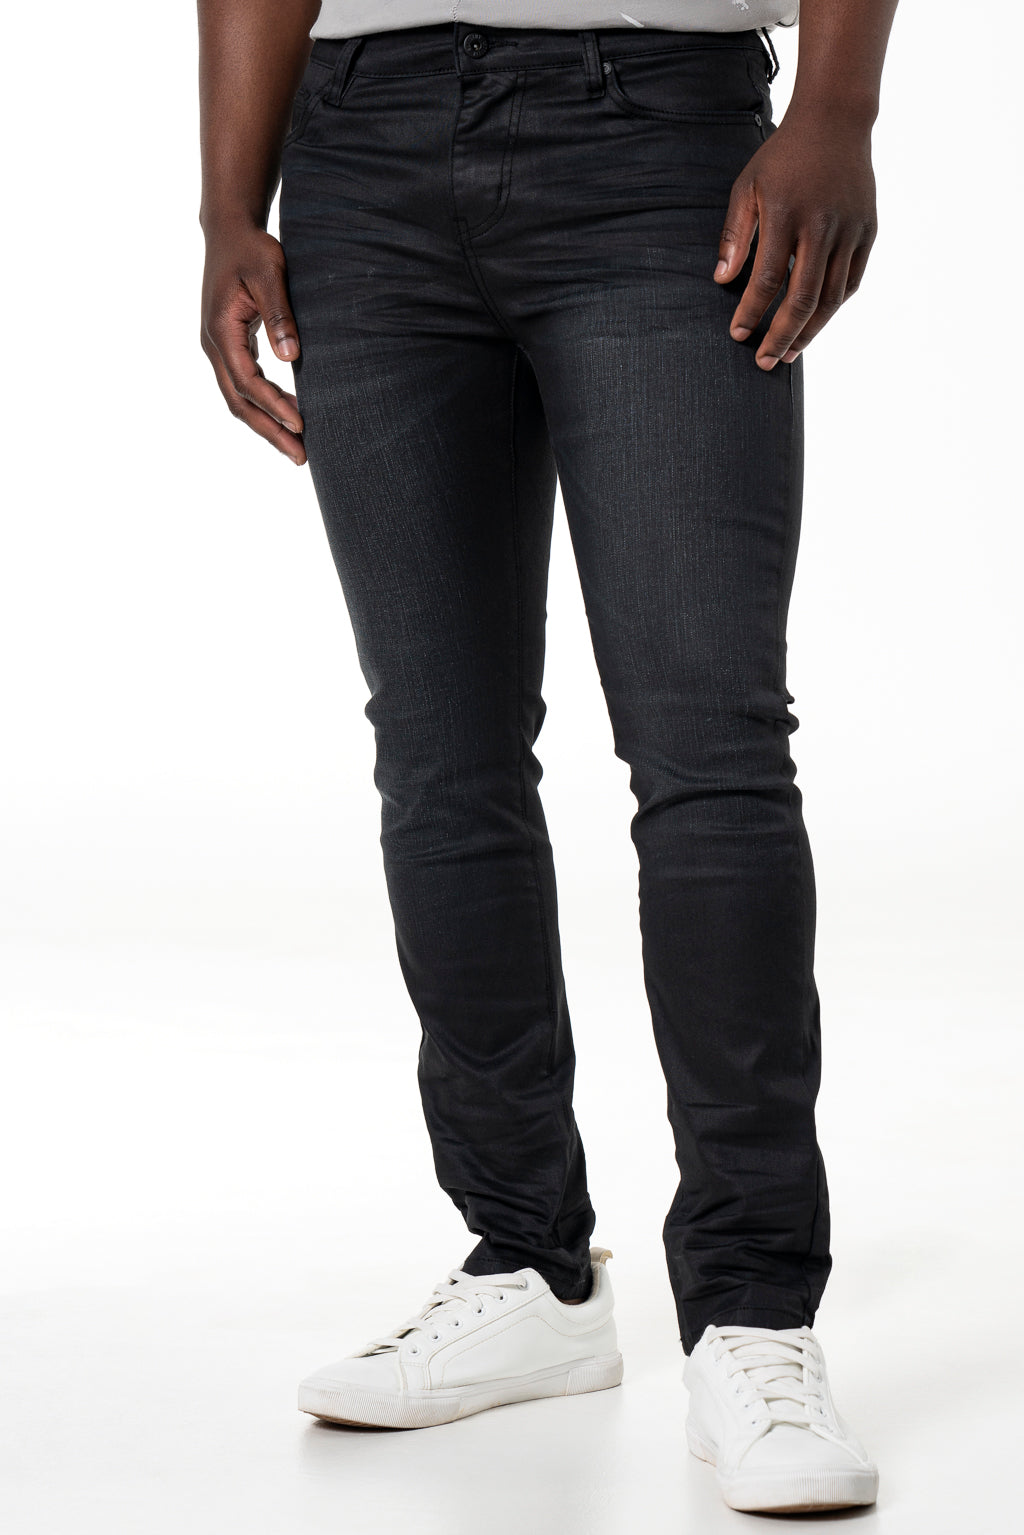 Rf02 Black Coated Jeans _ 137509 _ Black